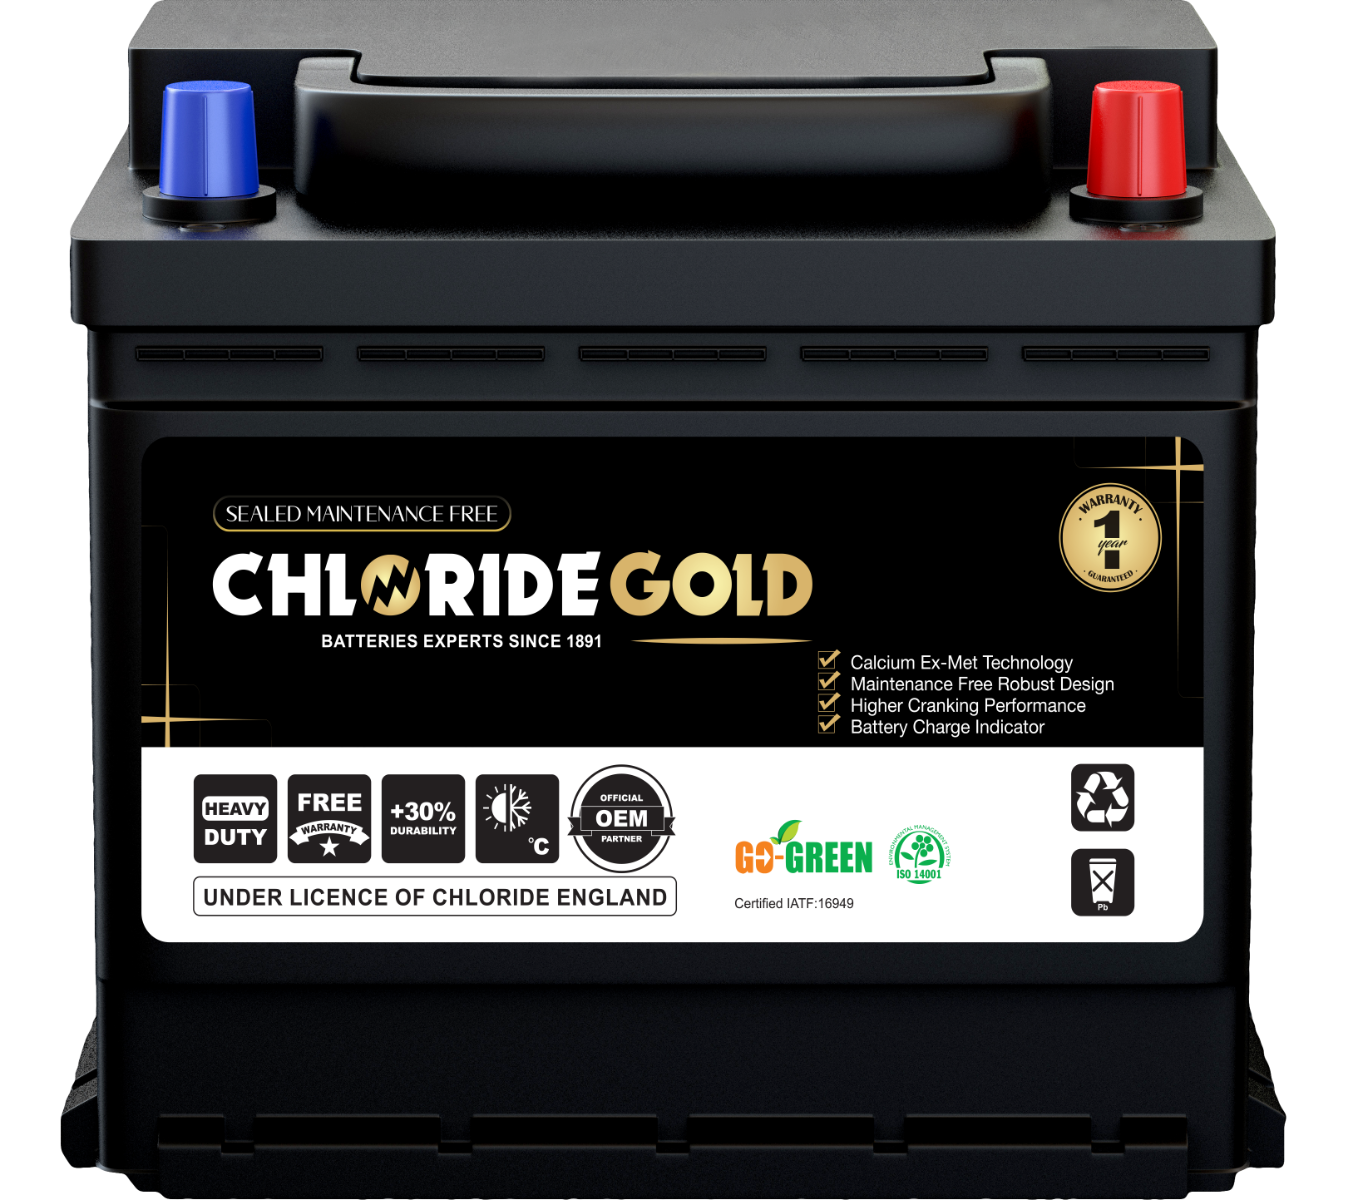 Chloride Gold